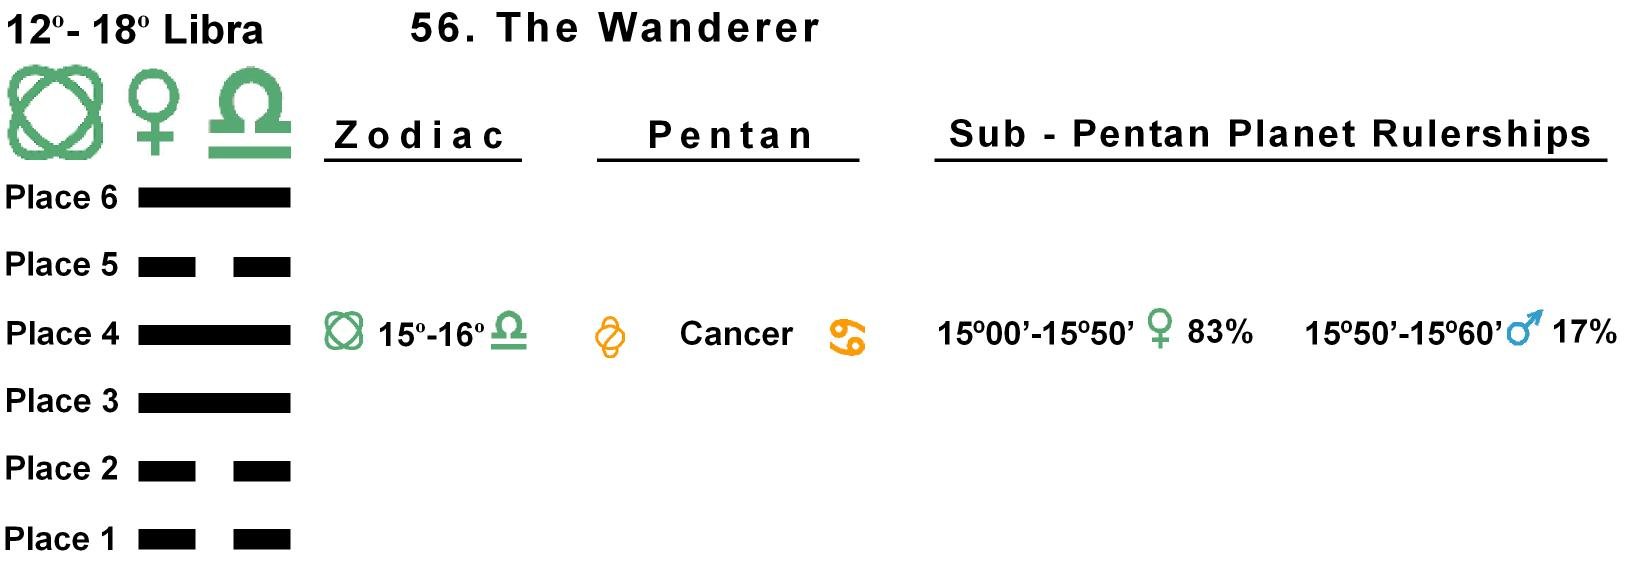 Pent-lines-07LI 15-16 Hx-56 The Wanderer